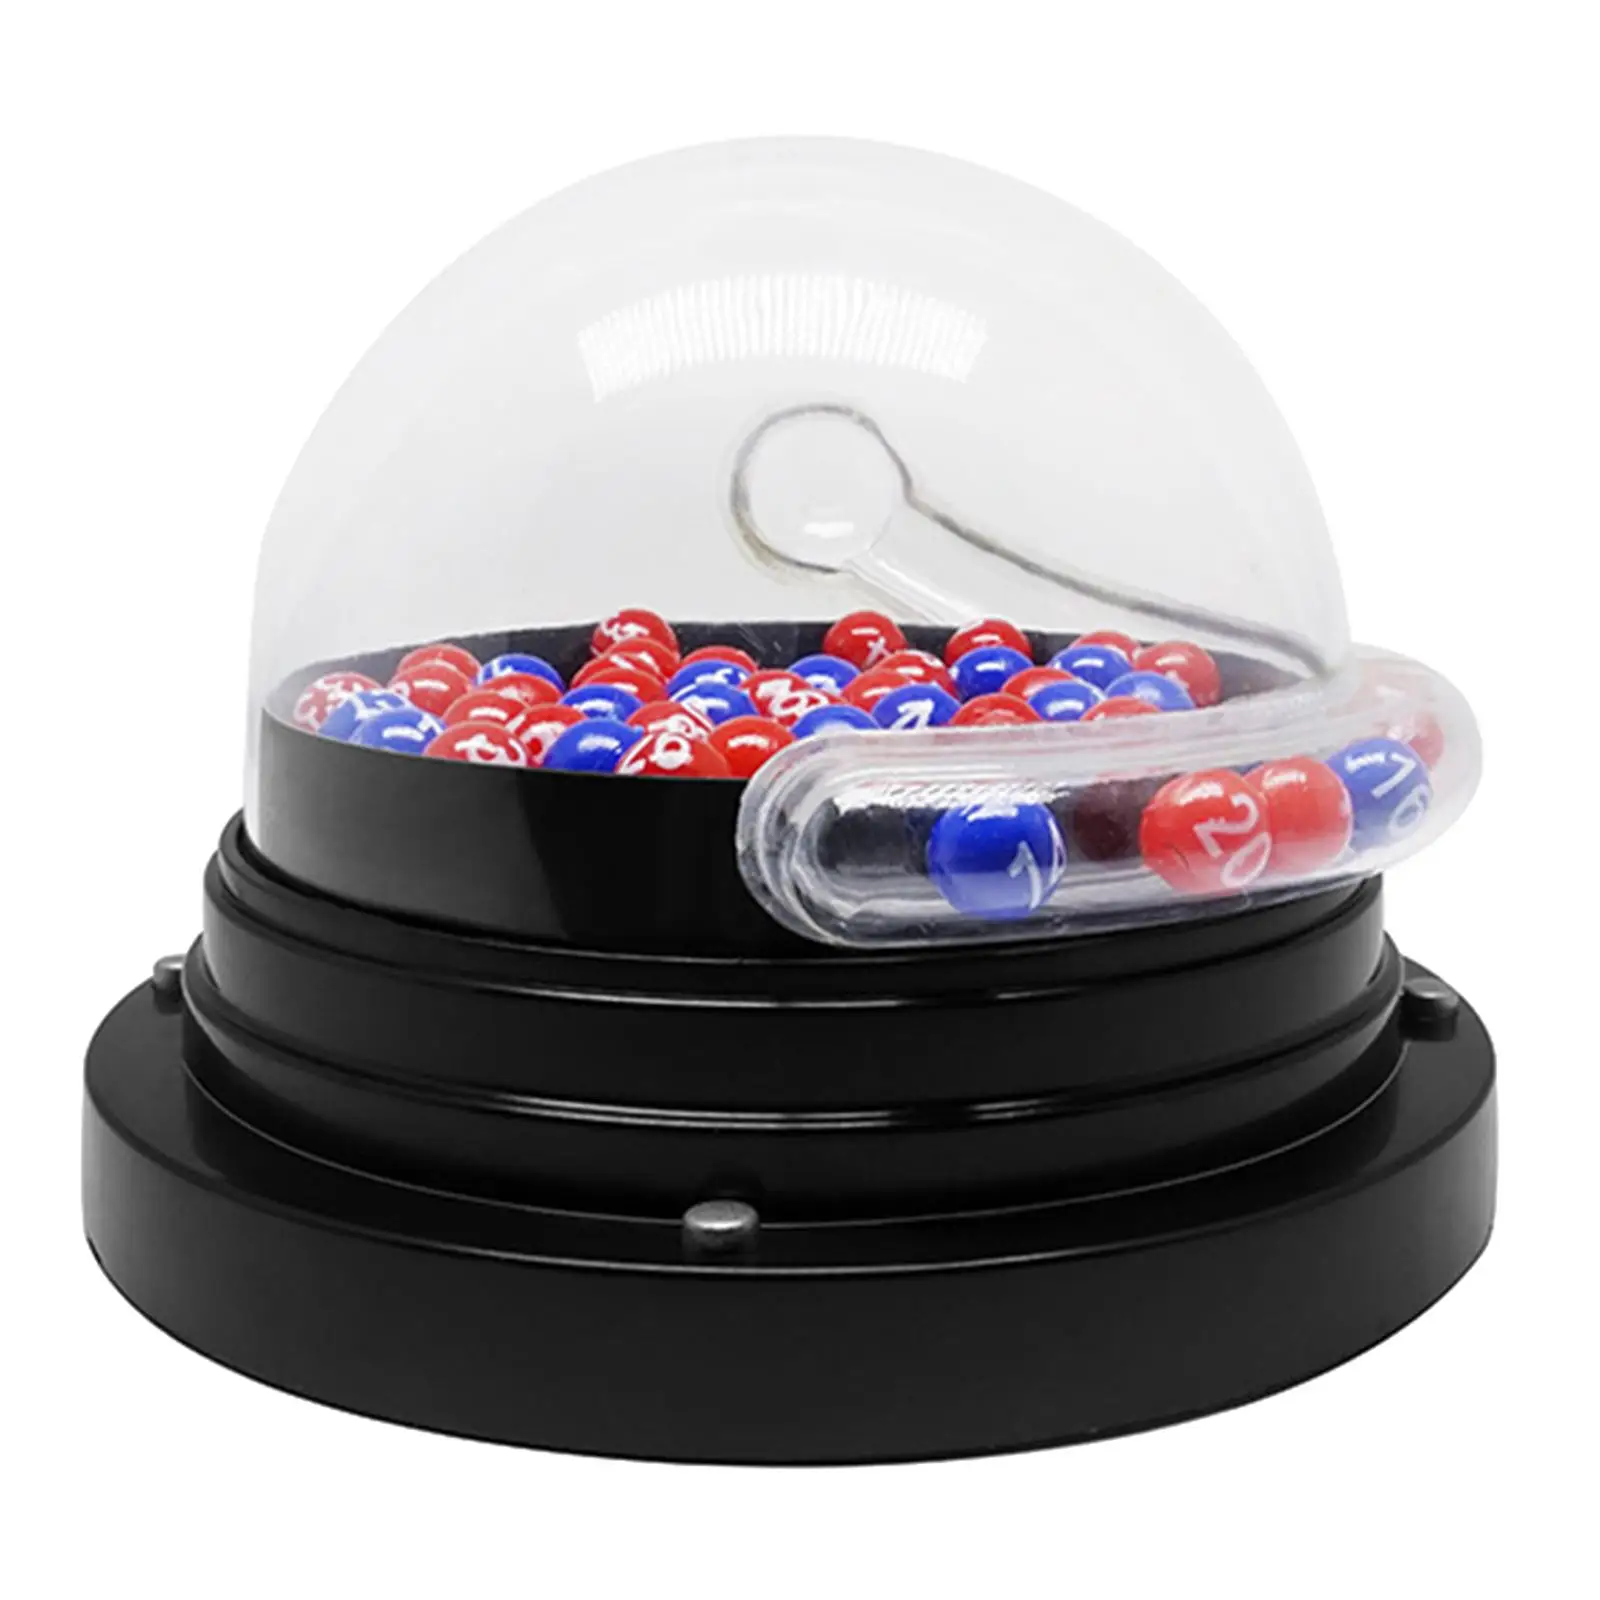 Portable Bingo Lotto Machine Pub Game for Home Entertainment Game Bar Family